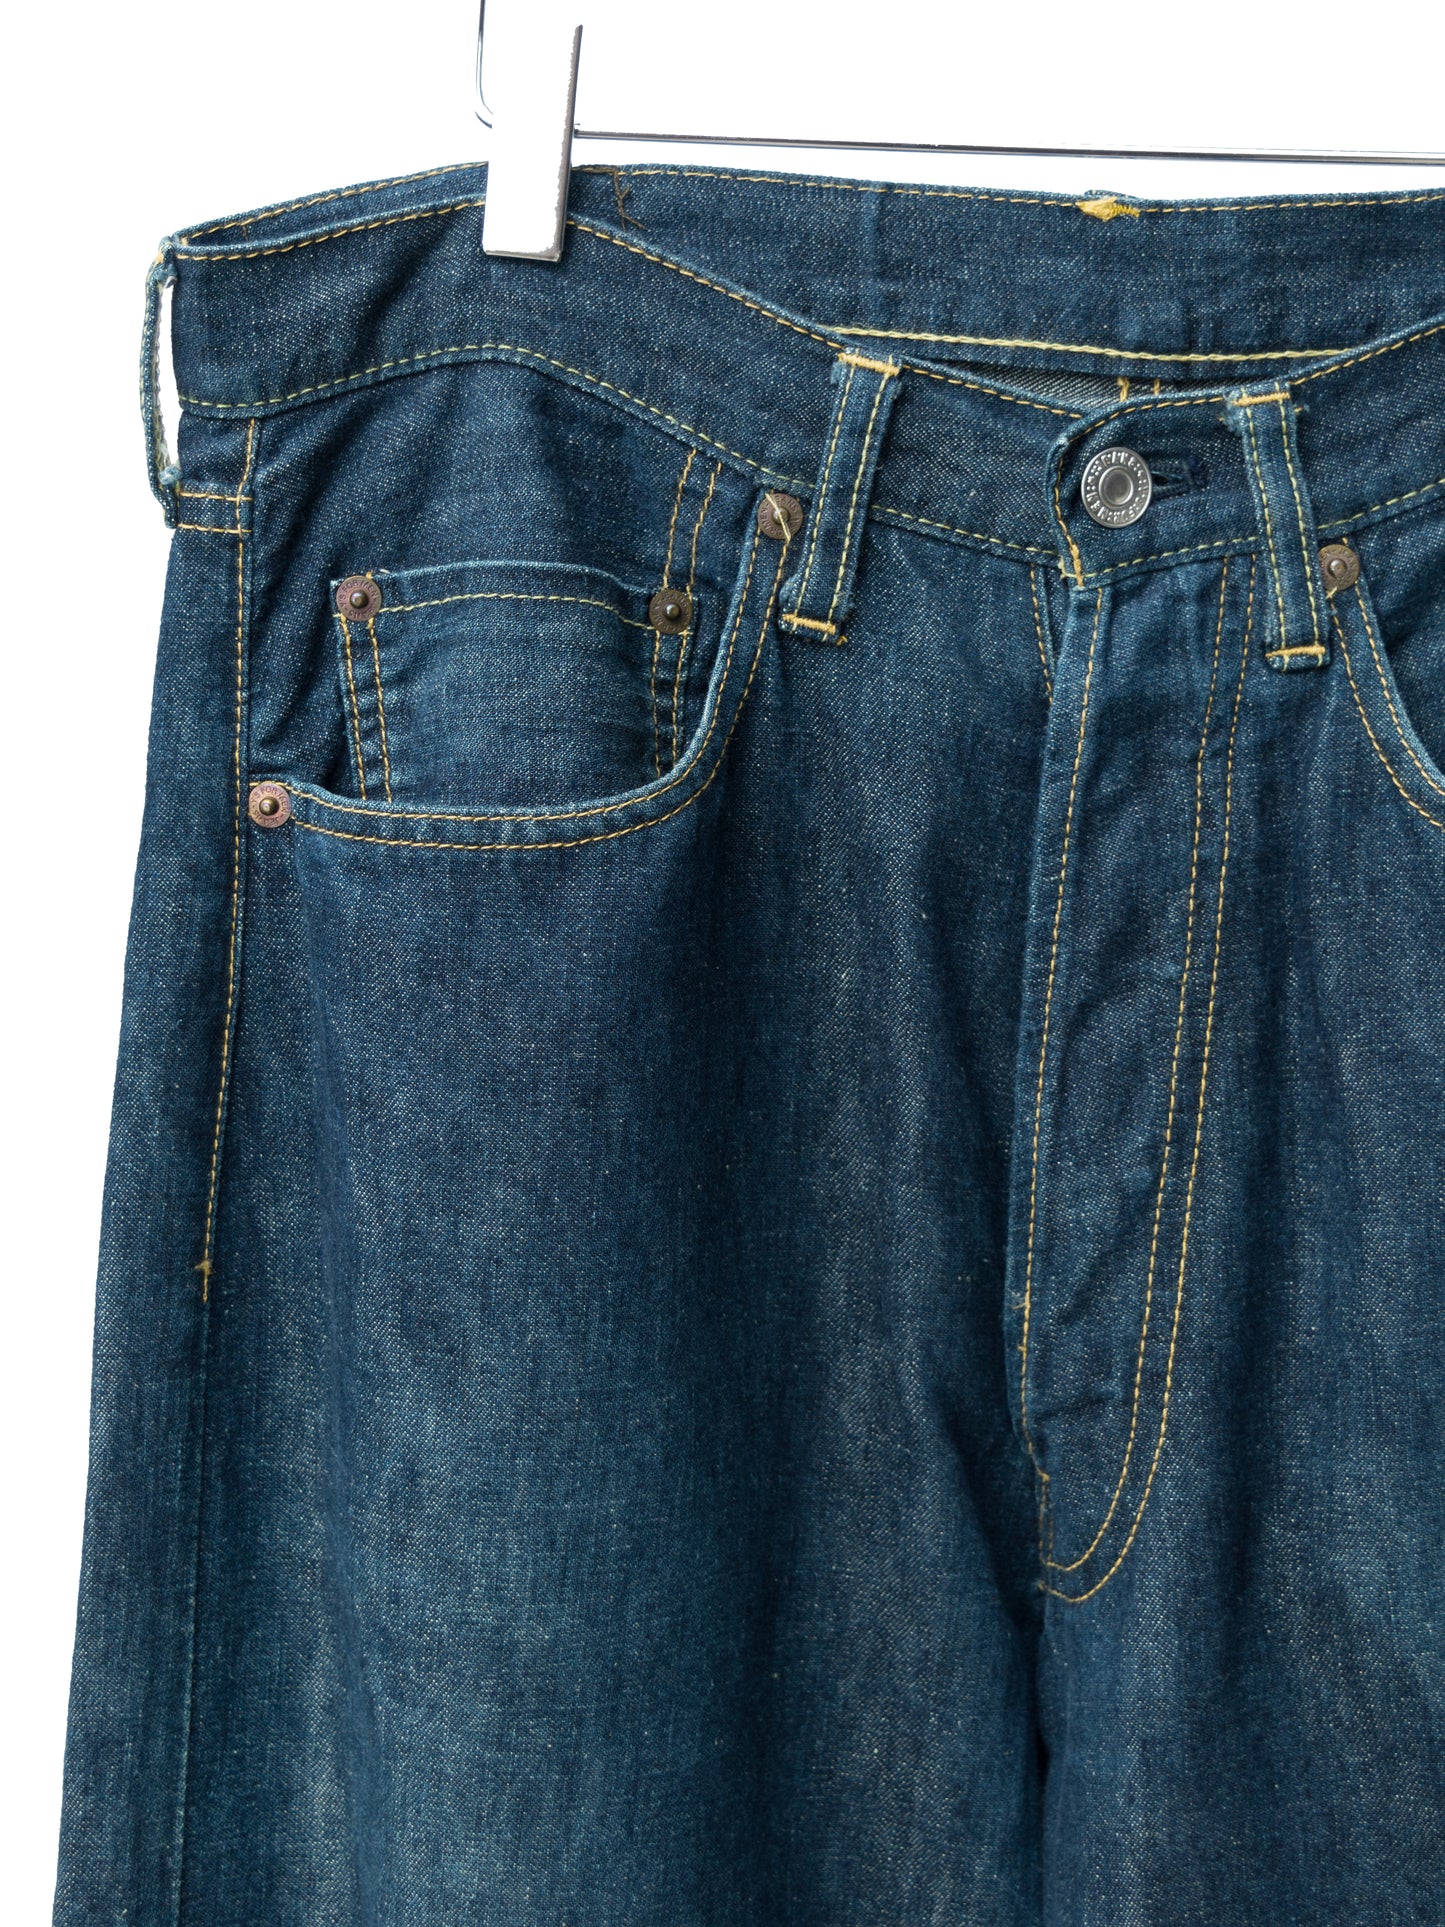 5p jeans indigo ∙ cotton linen denim ∙ small